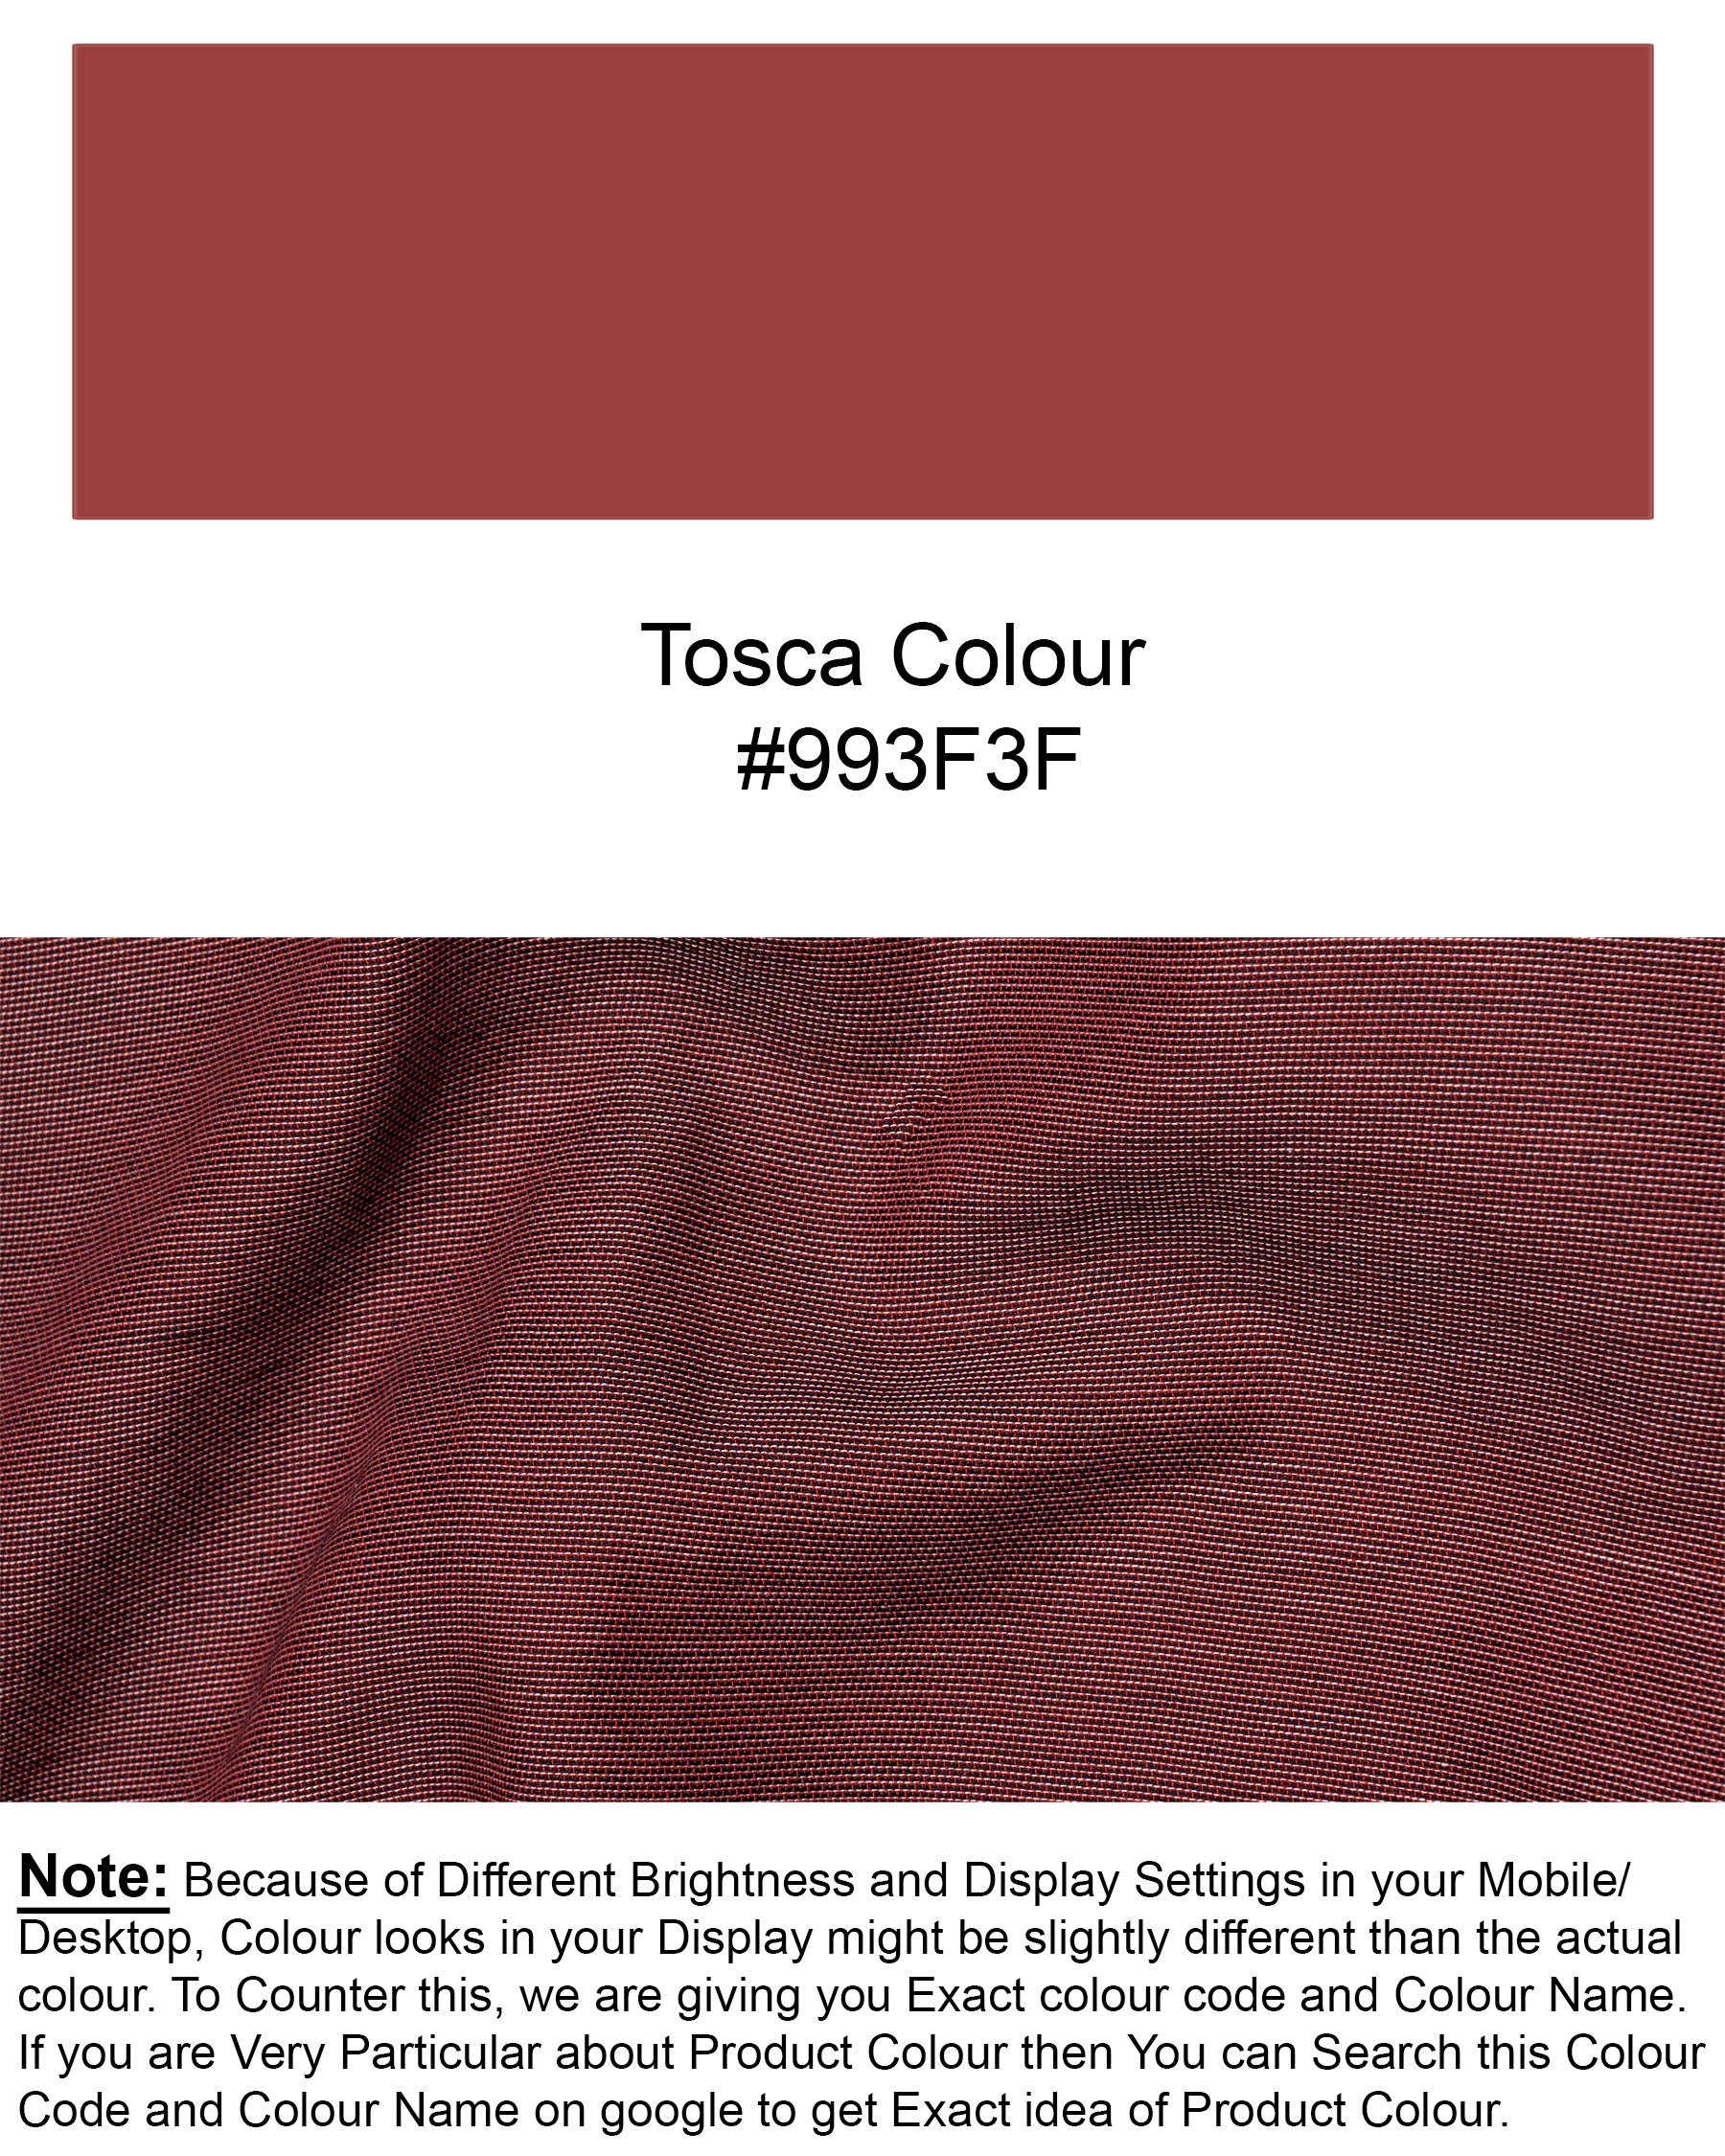 Tosca Rust Dobby Textured Premium Giza Cotton Shirt 6259-CA-MN-38, 6259-CA-MN-H-38, 6259-CA-MN-39, 6259-CA-MN-H-39, 6259-CA-MN-40, 6259-CA-MN-H-40, 6259-CA-MN-42, 6259-CA-MN-H-42, 6259-CA-MN-44, 6259-CA-MN-H-44, 6259-CA-MN-46, 6259-CA-MN-H-46, 6259-CA-MN-48, 6259-CA-MN-H-48, 6259-CA-MN-50, 6259-CA-MN-H-50, 6259-CA-MN-52, 6259-CA-MN-H-52